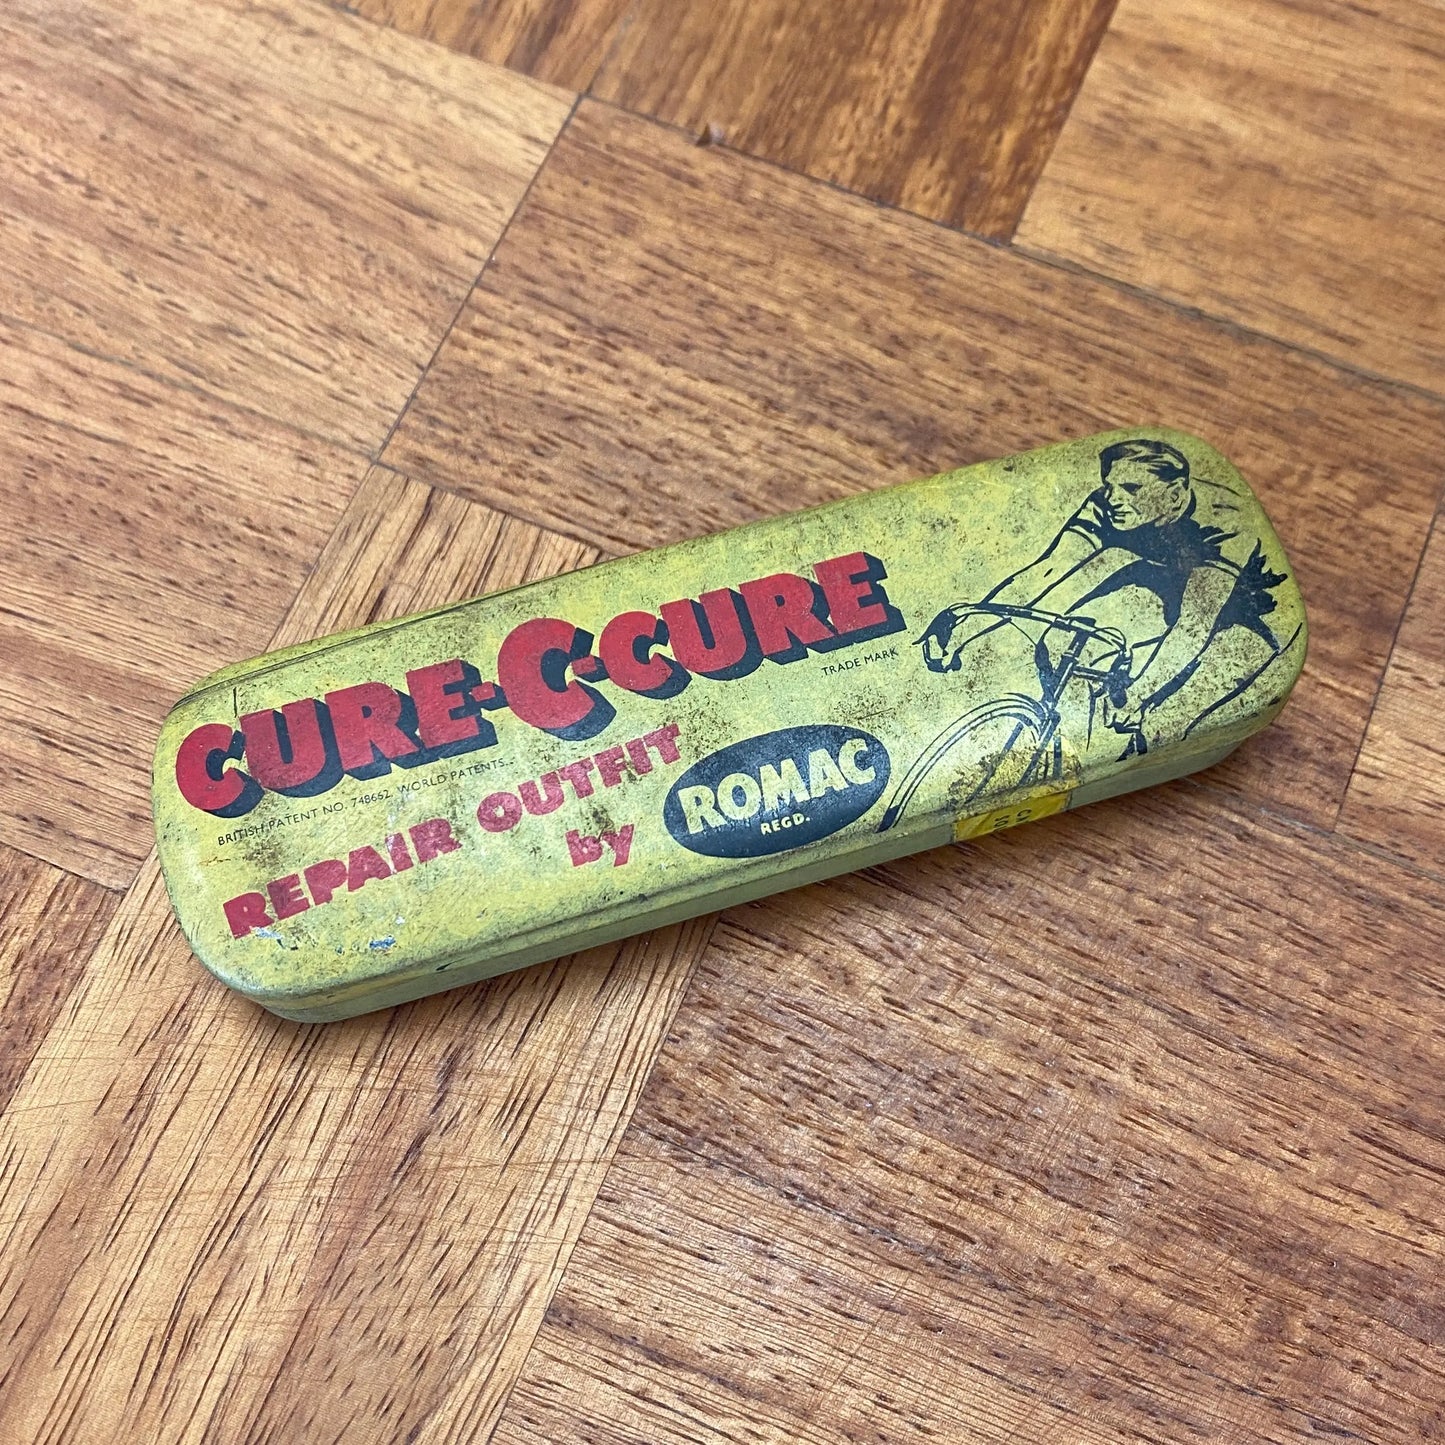 Cure C Cure Vintage Tin